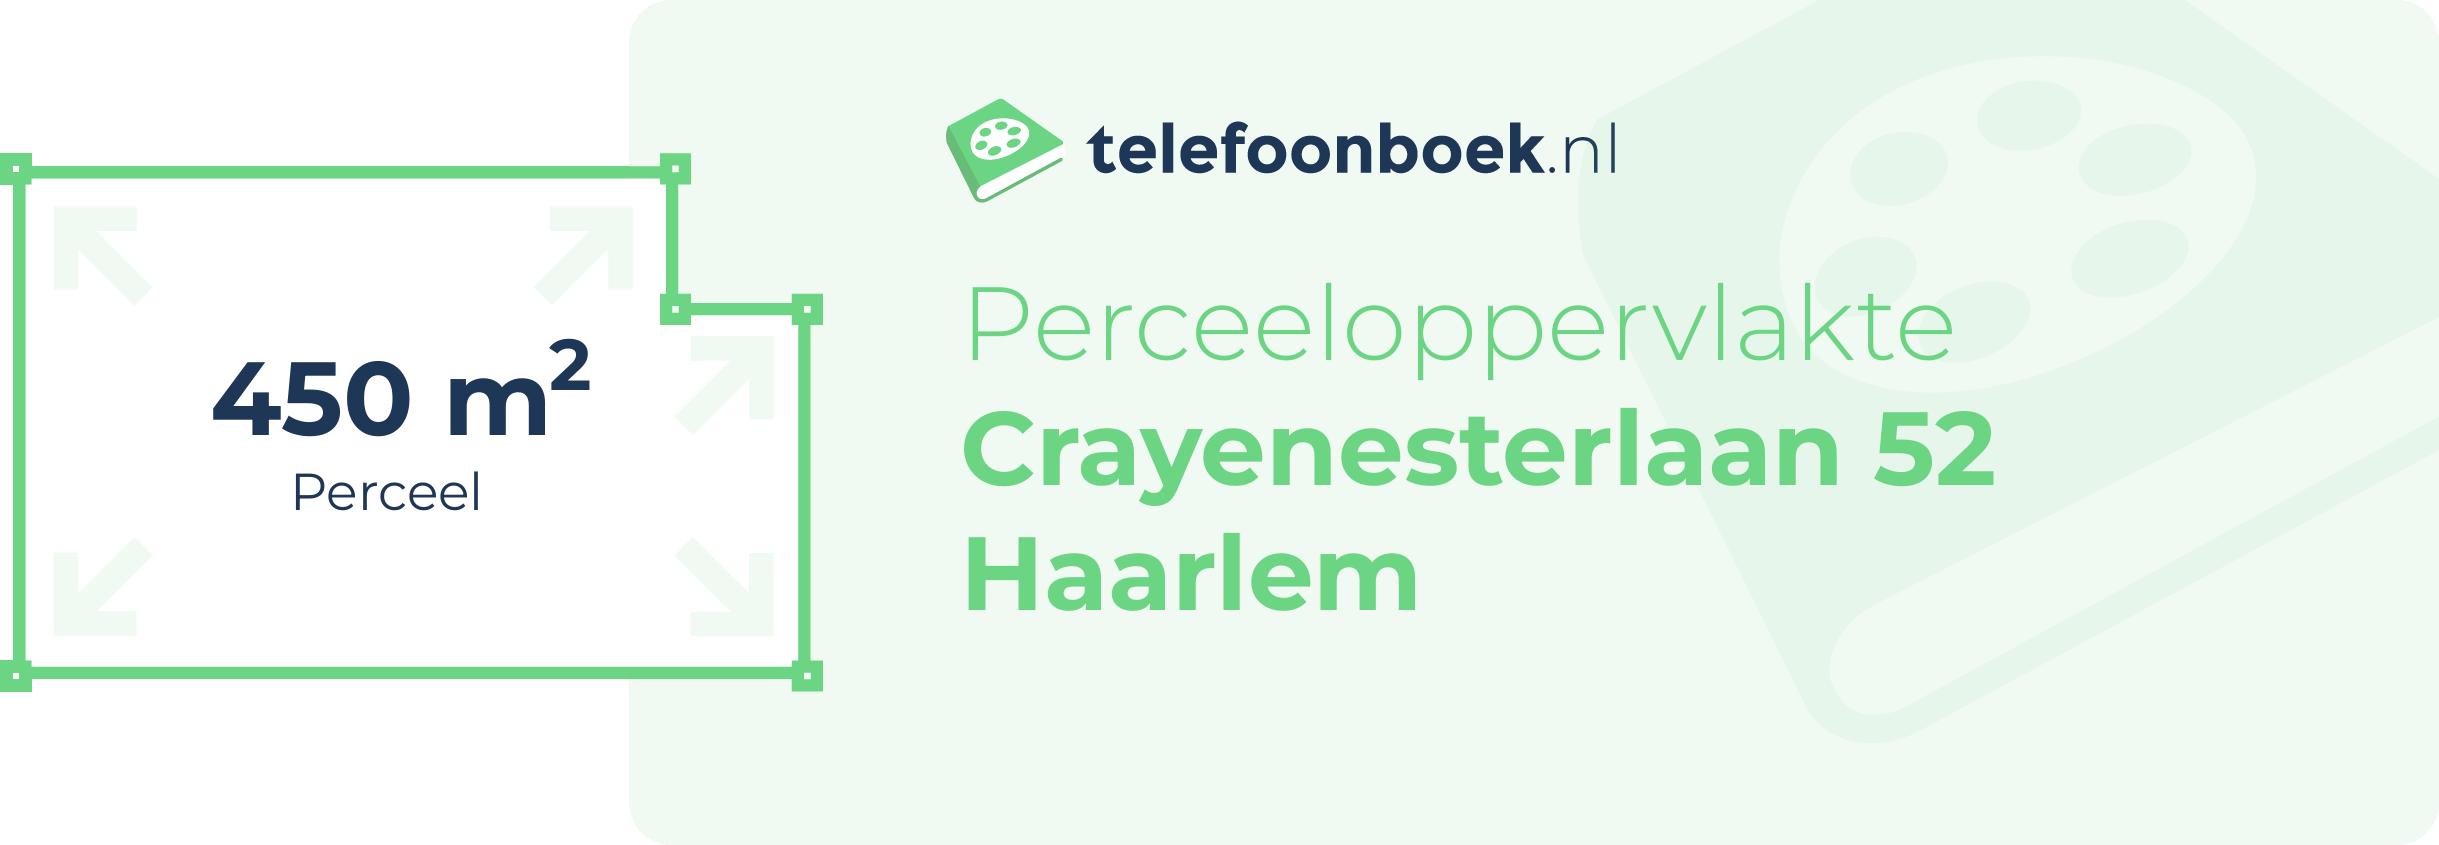 Perceeloppervlakte Crayenesterlaan 52 Haarlem